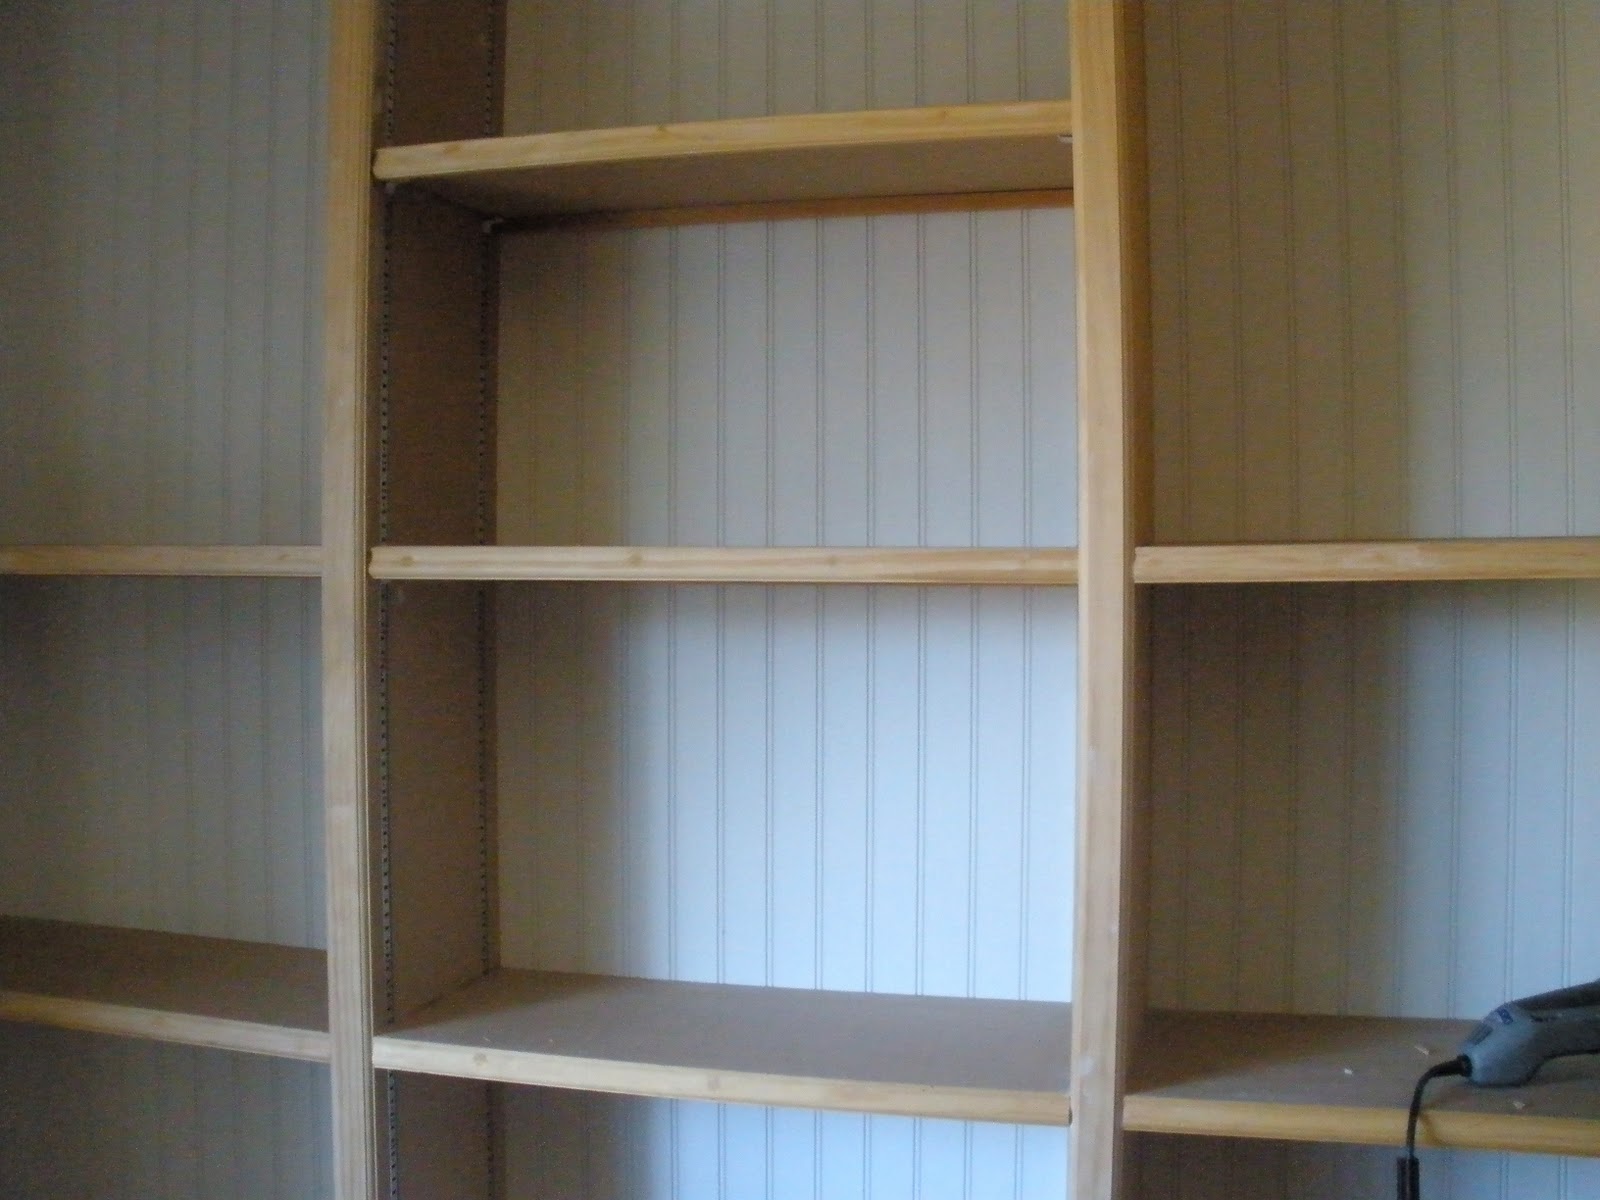 Building Shelves